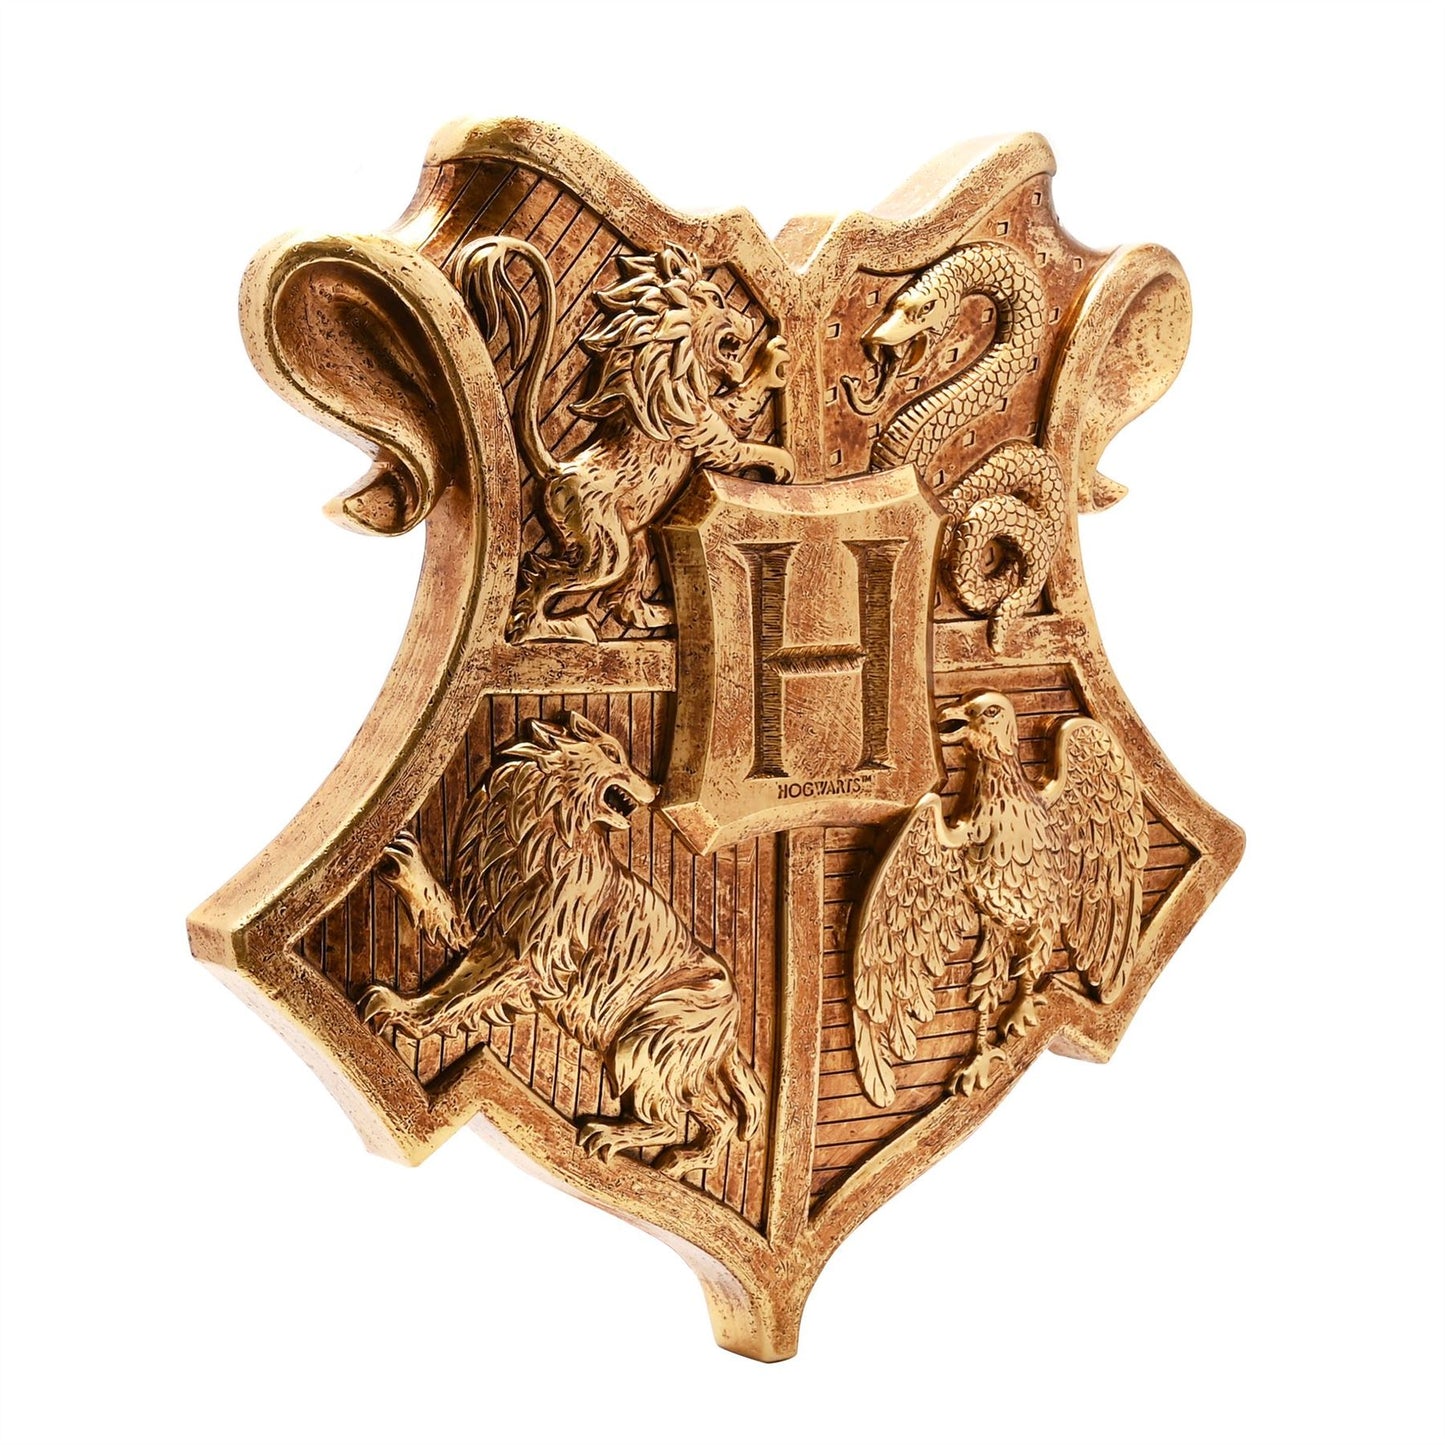 Warner Bros Harry Potter Alumni Wall Shield